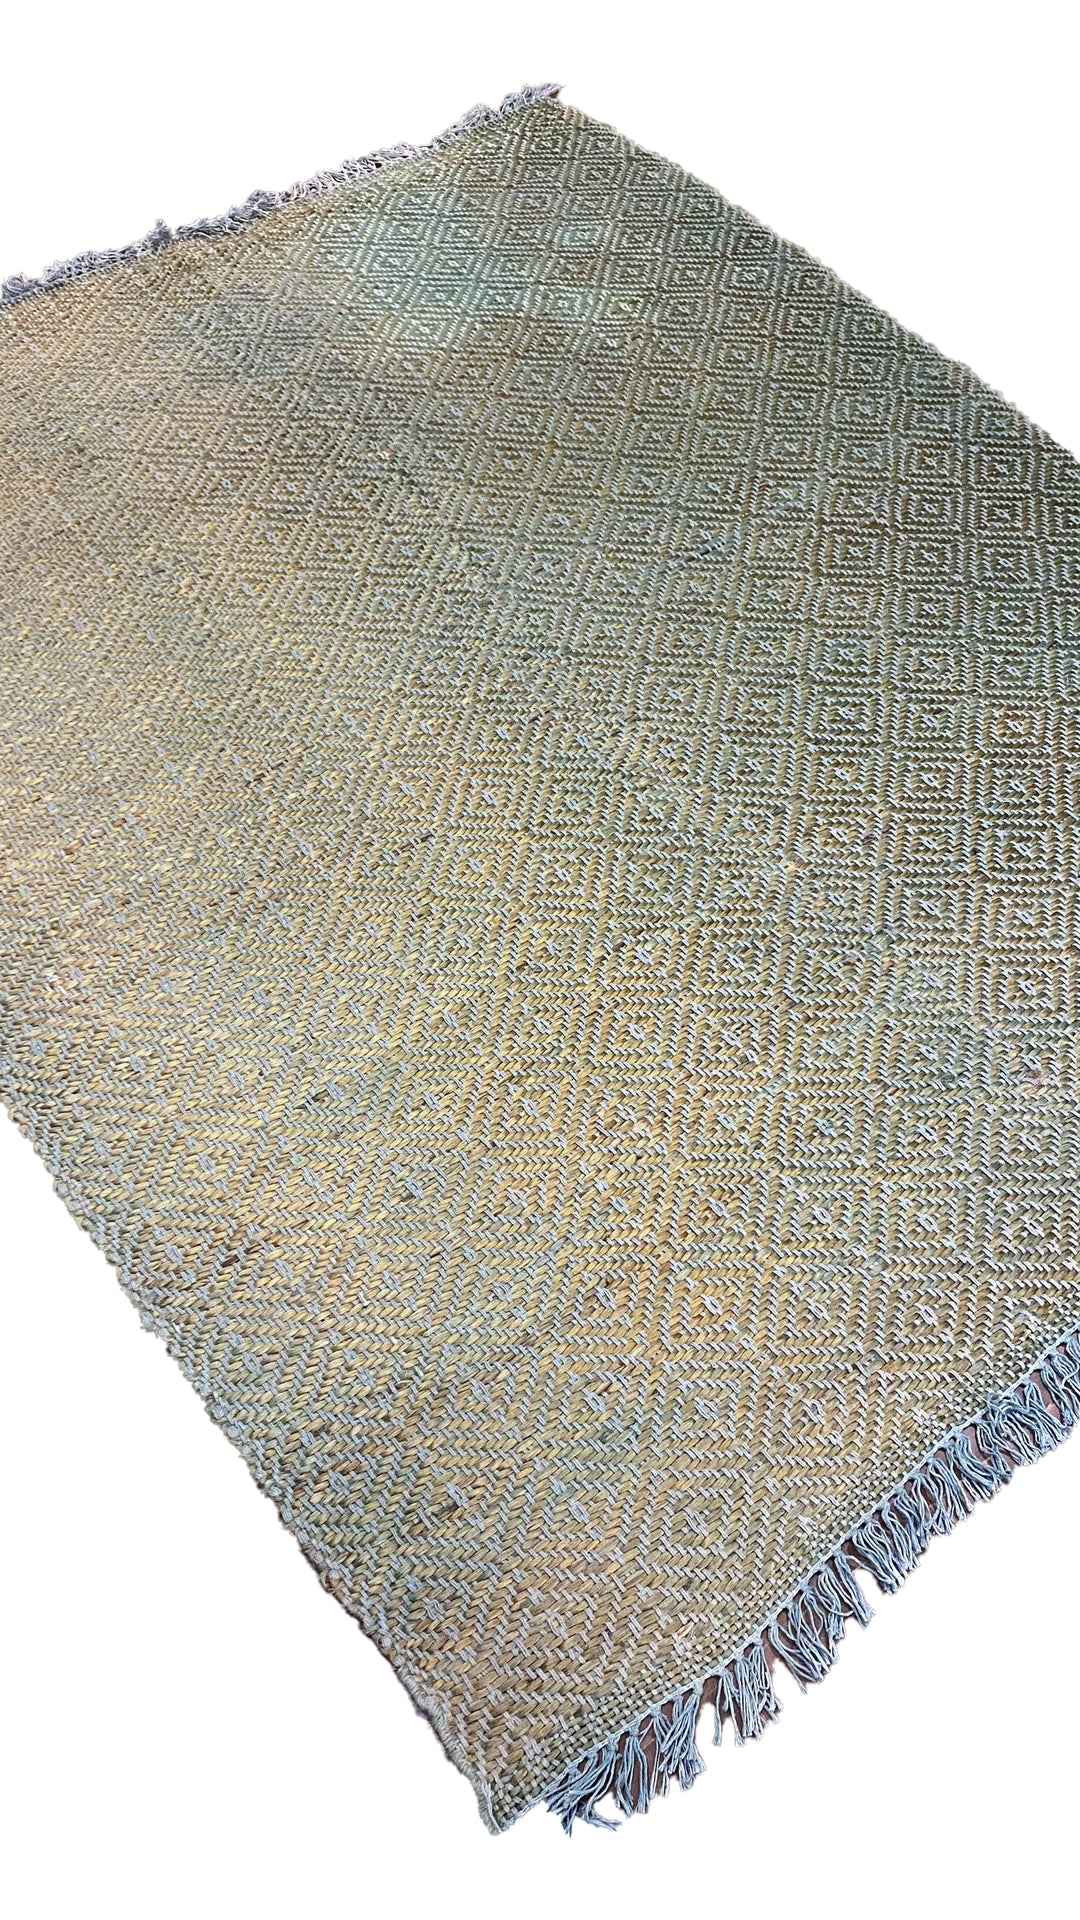 Haritah - Size: 6.8 x 5.4 - Imam Carpet Co